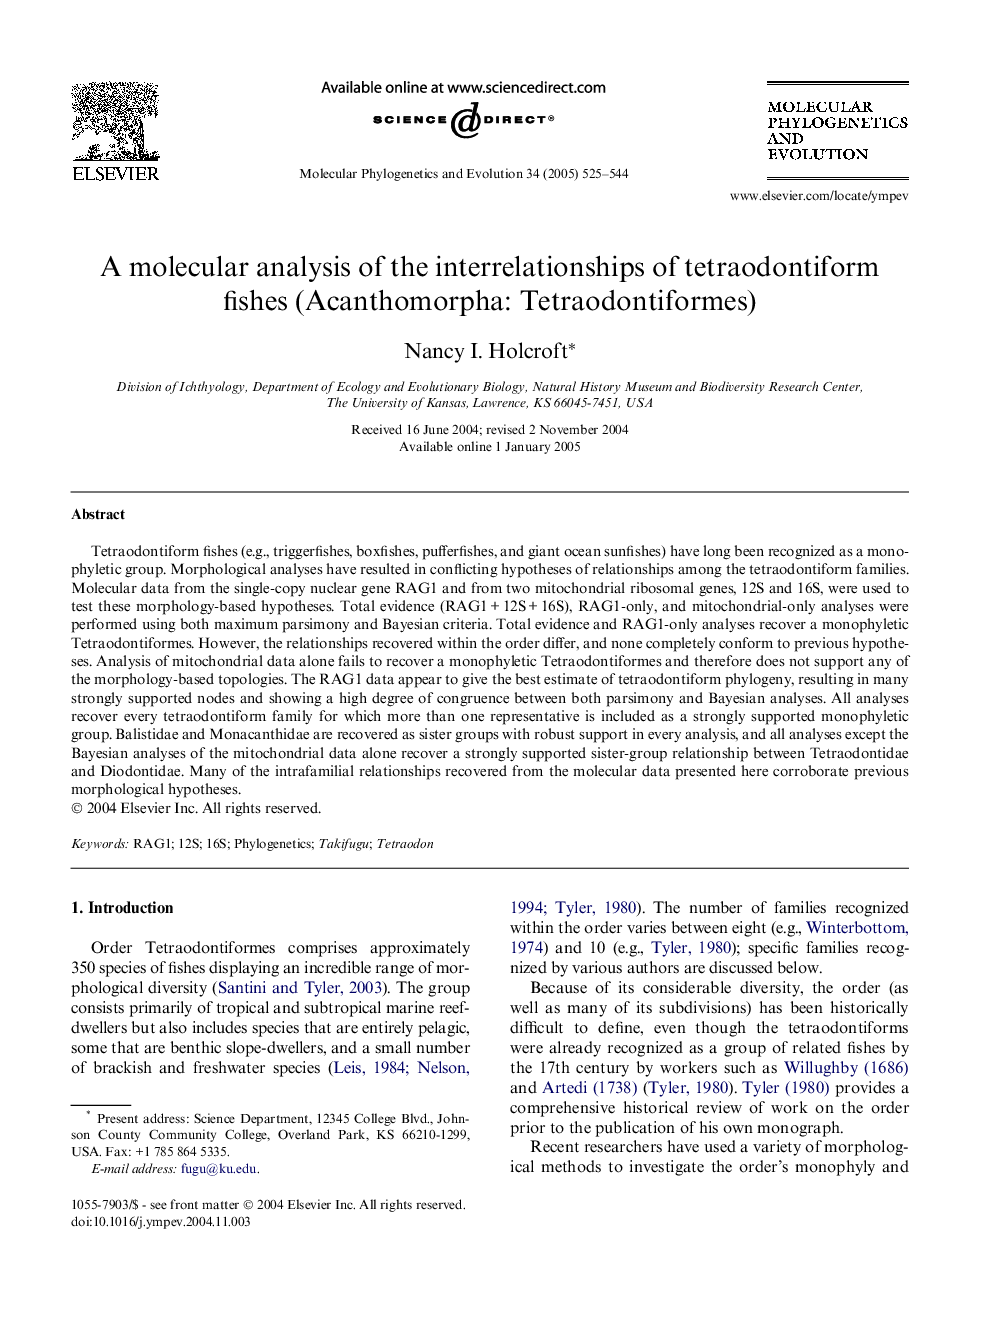 A molecular analysis of the interrelationships of tetraodontiform fishes (Acanthomorpha: Tetraodontiformes)